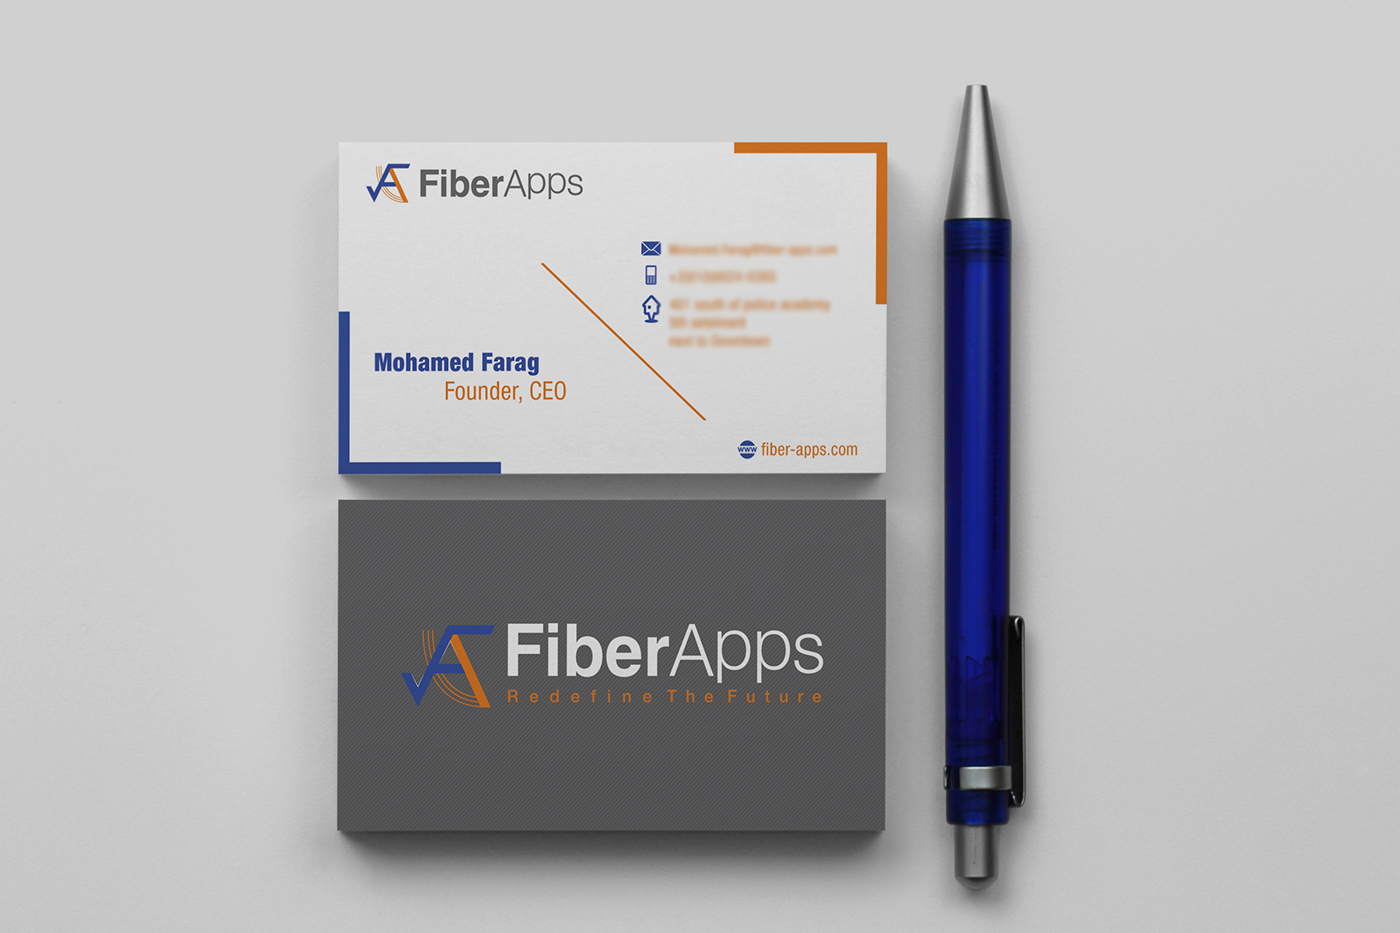 fiberapps logo Socialmedia brand company cover fiber apps